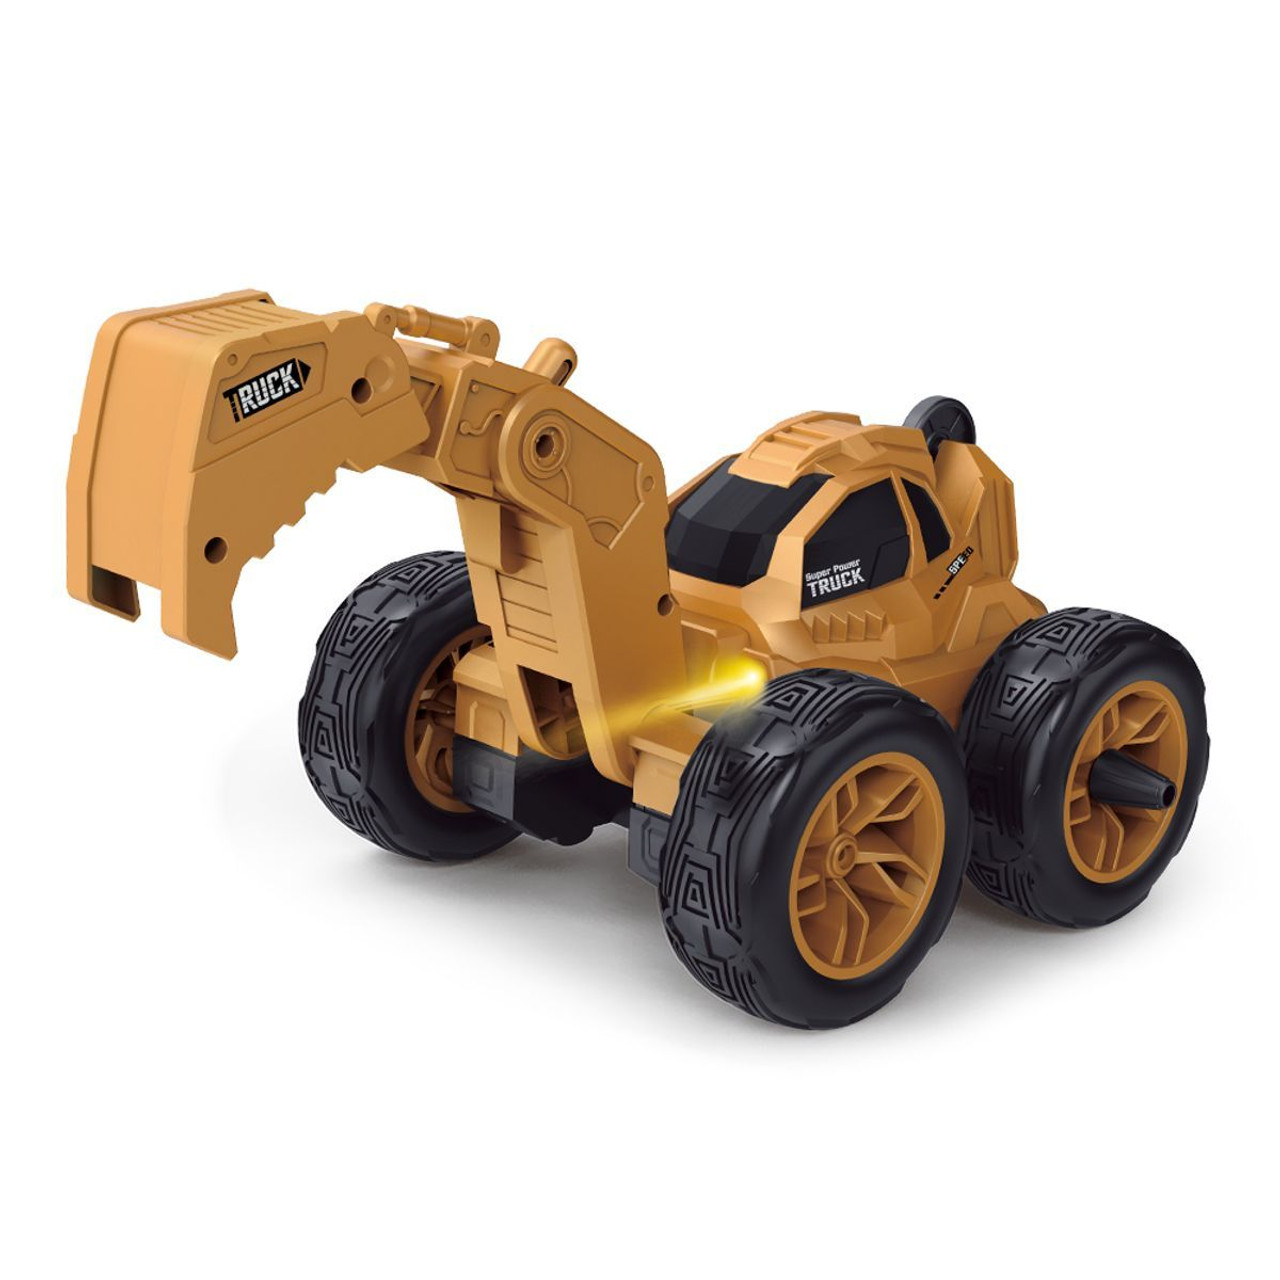 Kids' Remote Control Stunt Excavator Truck product image